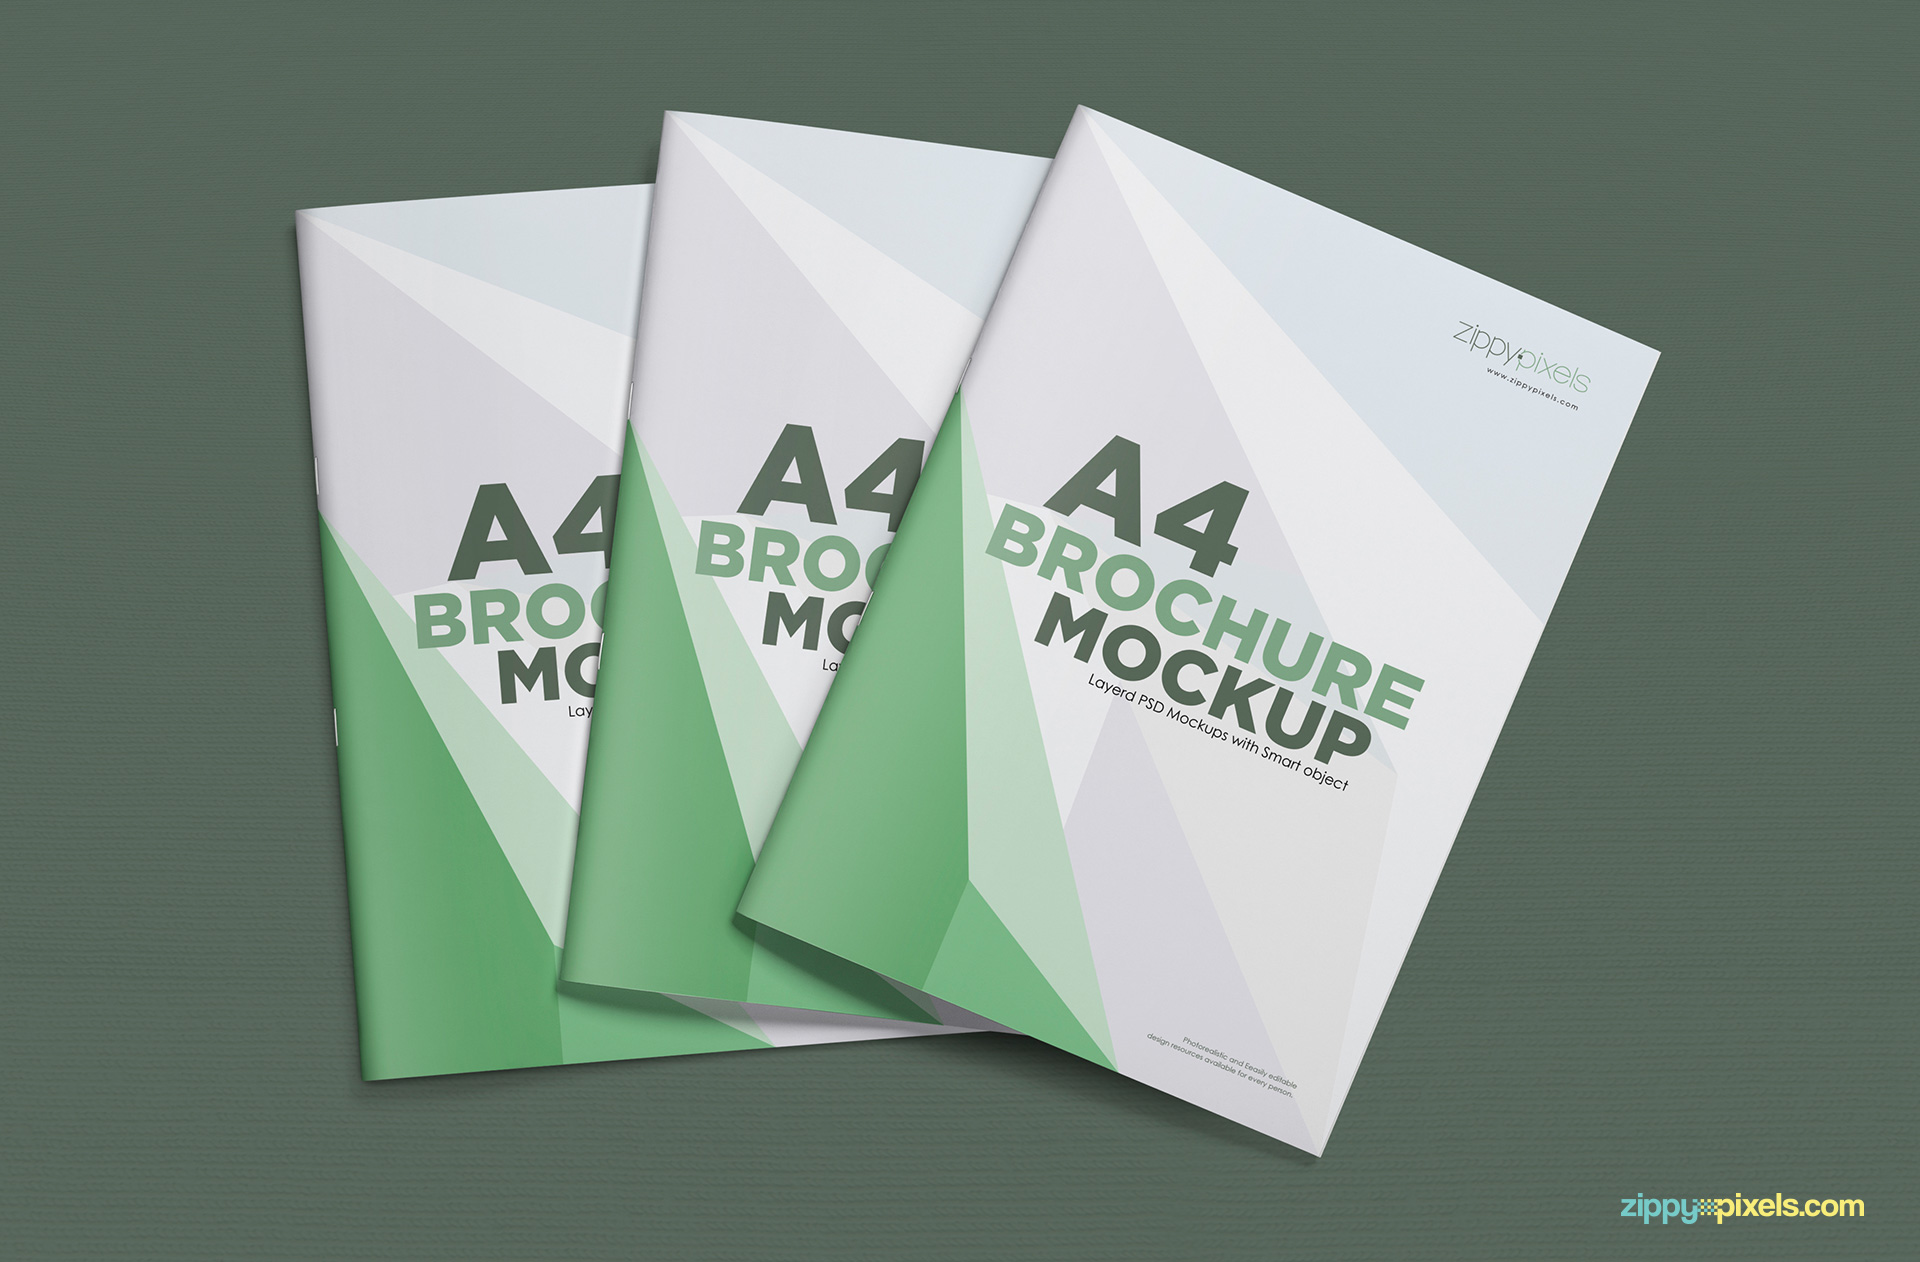 a4-brochure-mockup-3-front-view-brochures